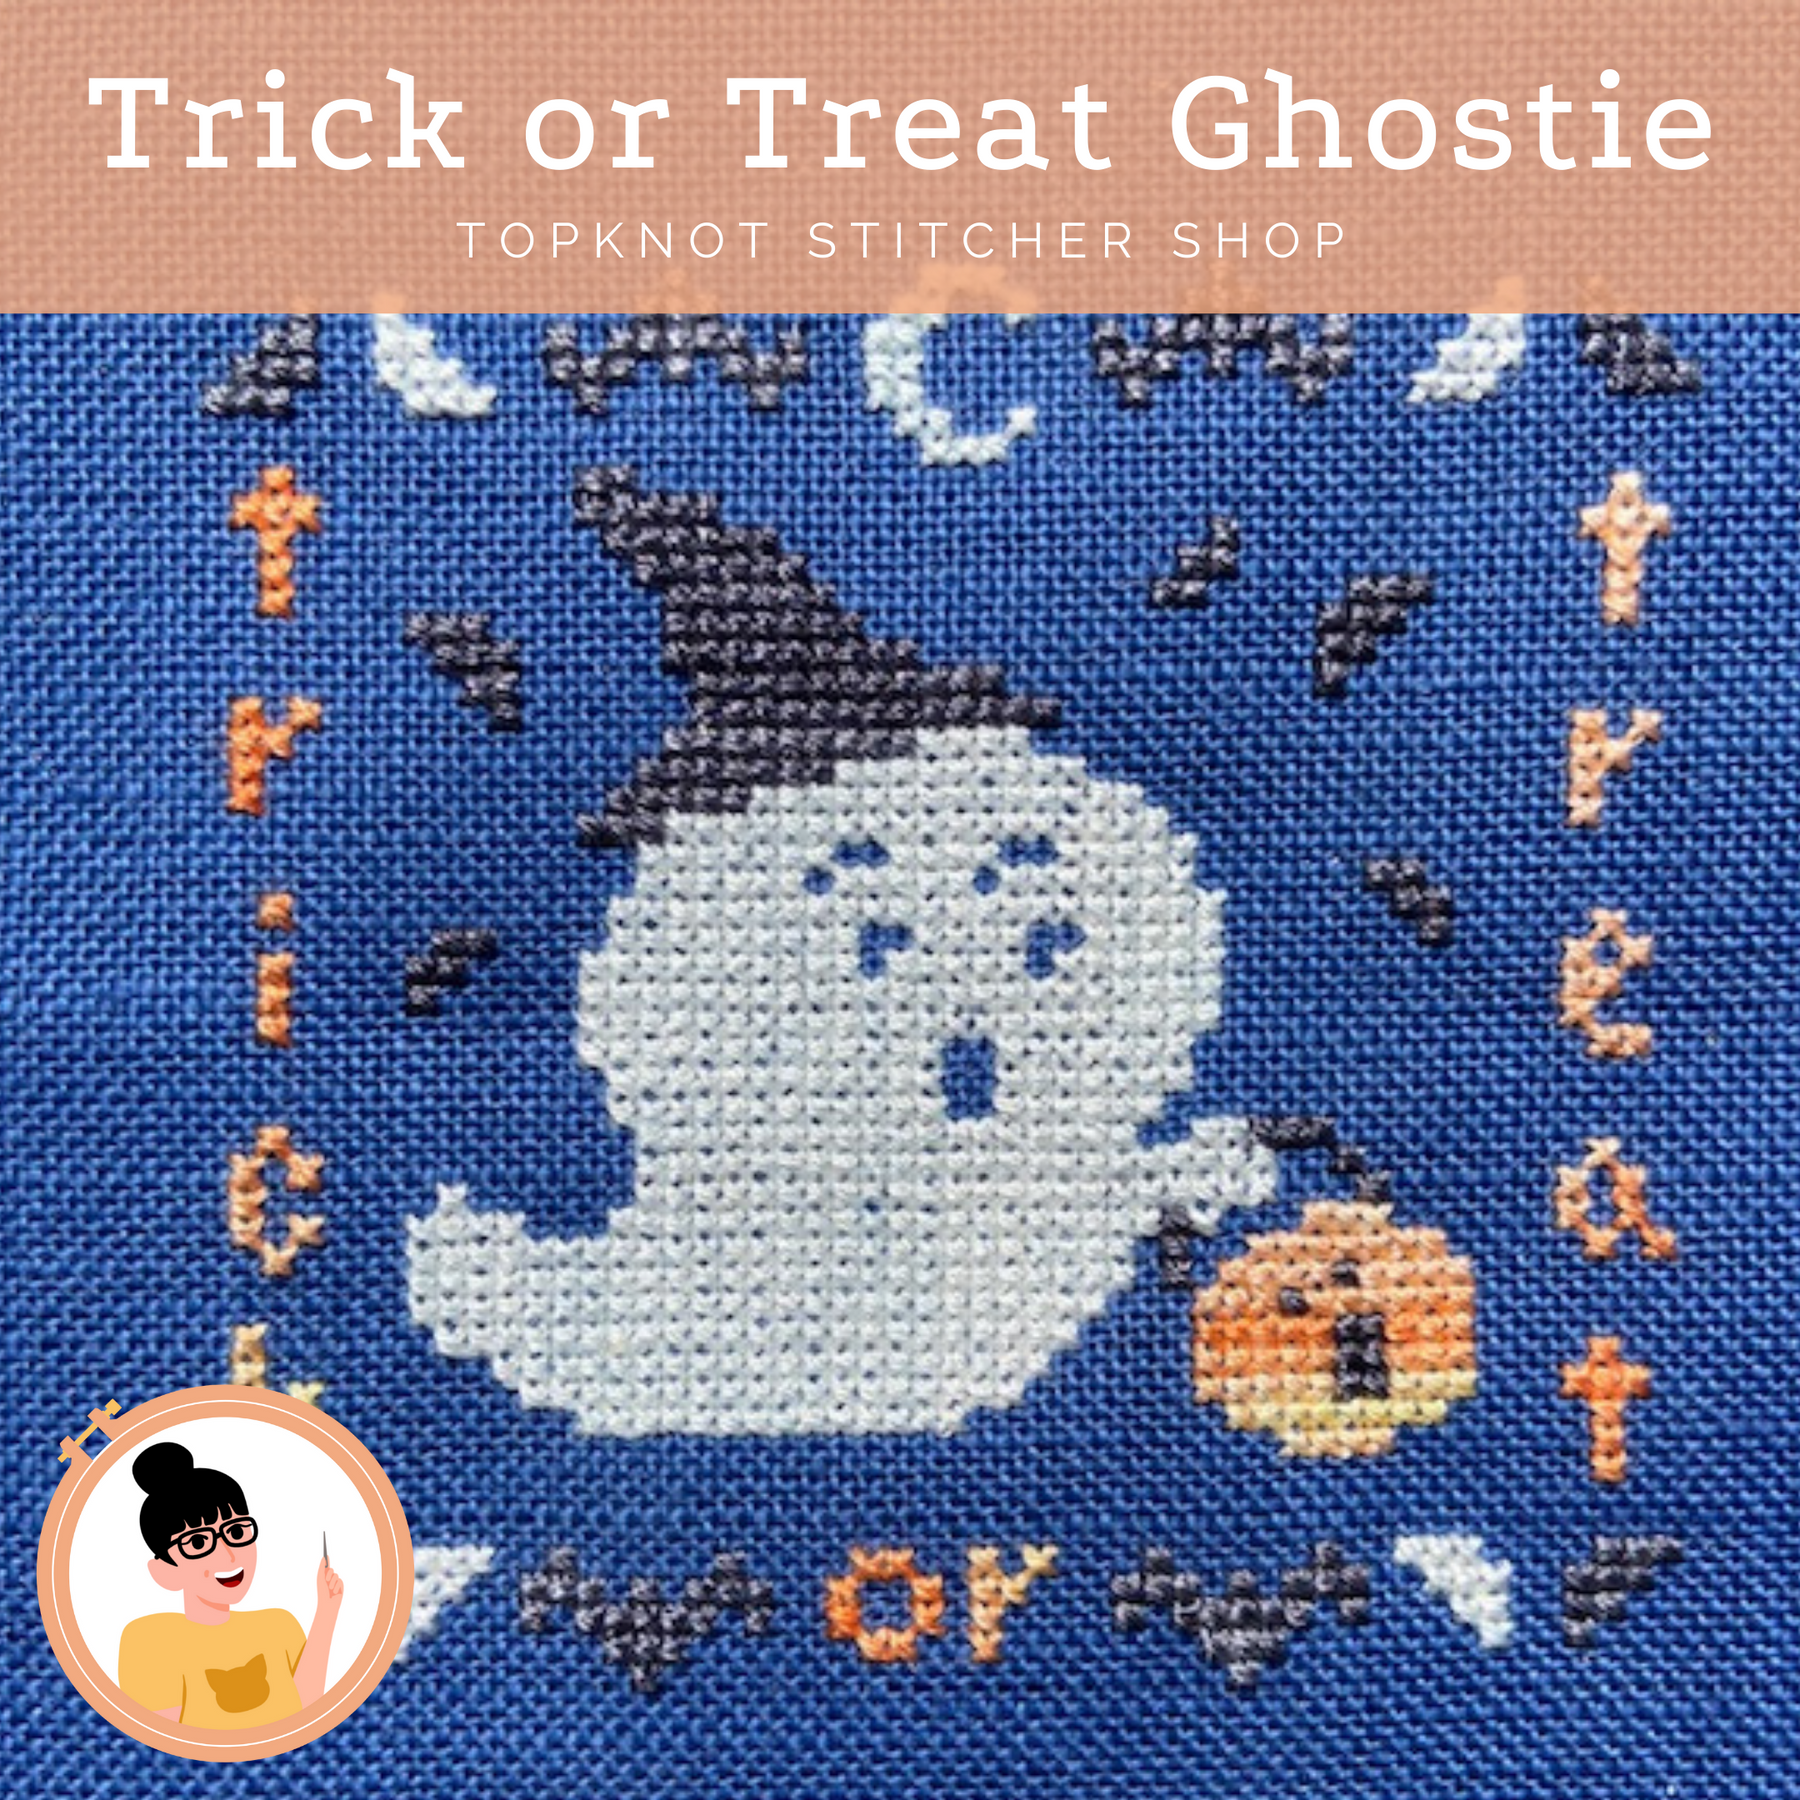 Trick or Treat Ghostie - TopKnot Stitcher Shop - Cross Stitch Pattern